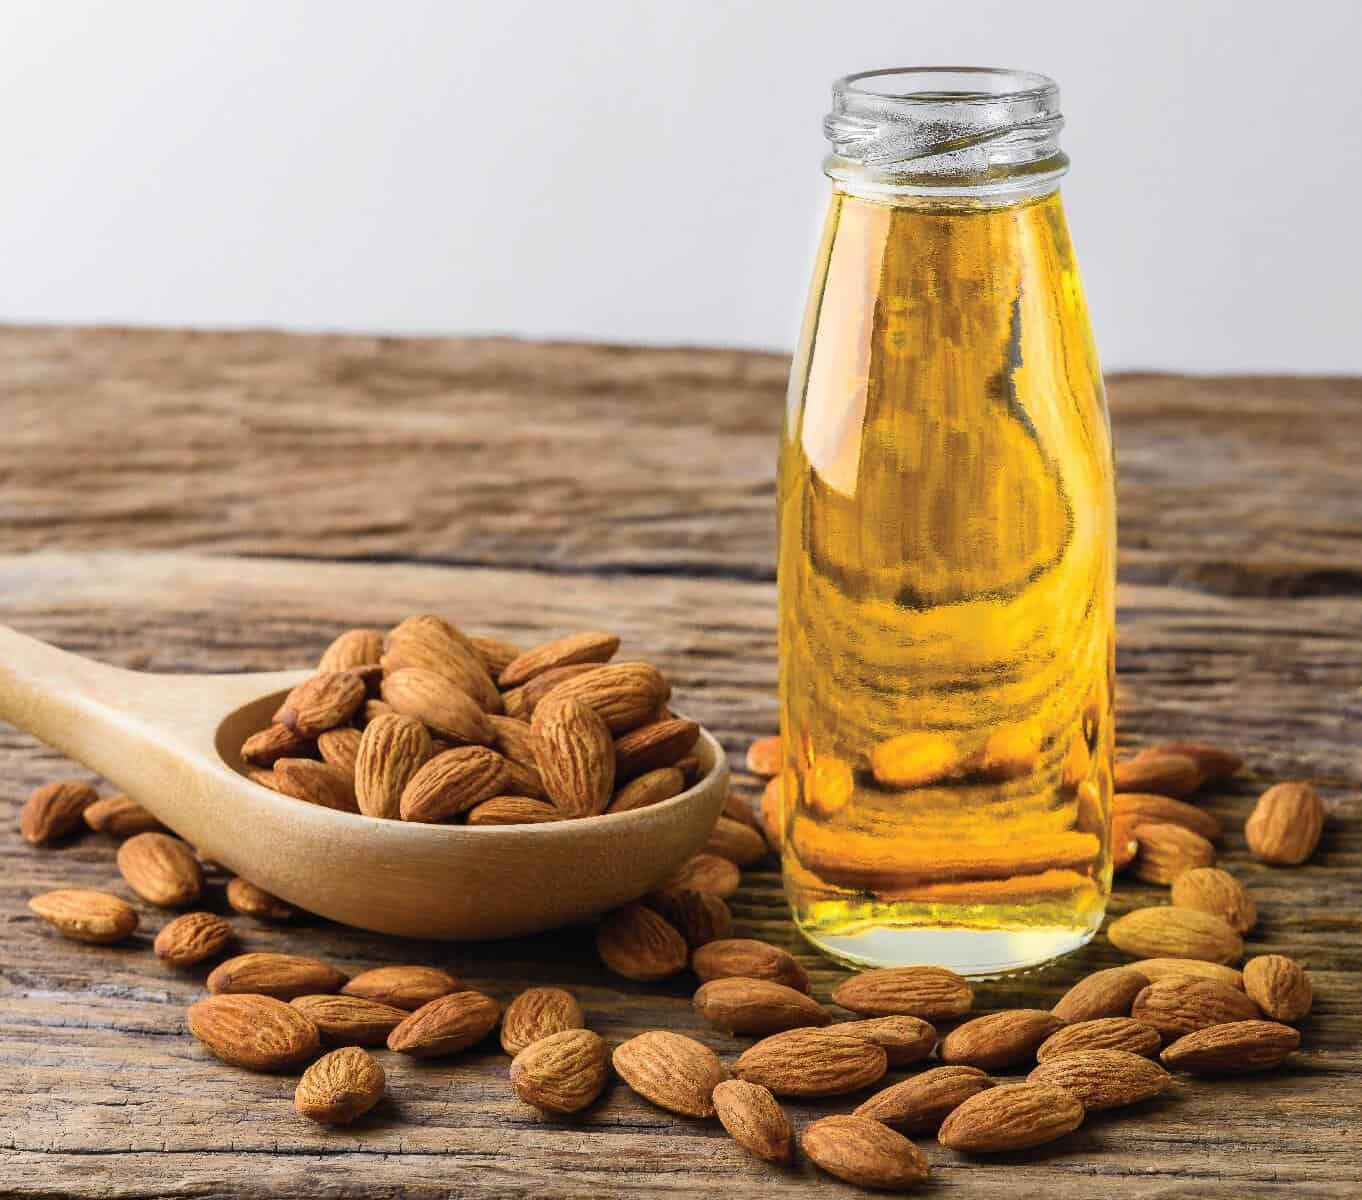 Top 4 Beauty Benefits of Almonds